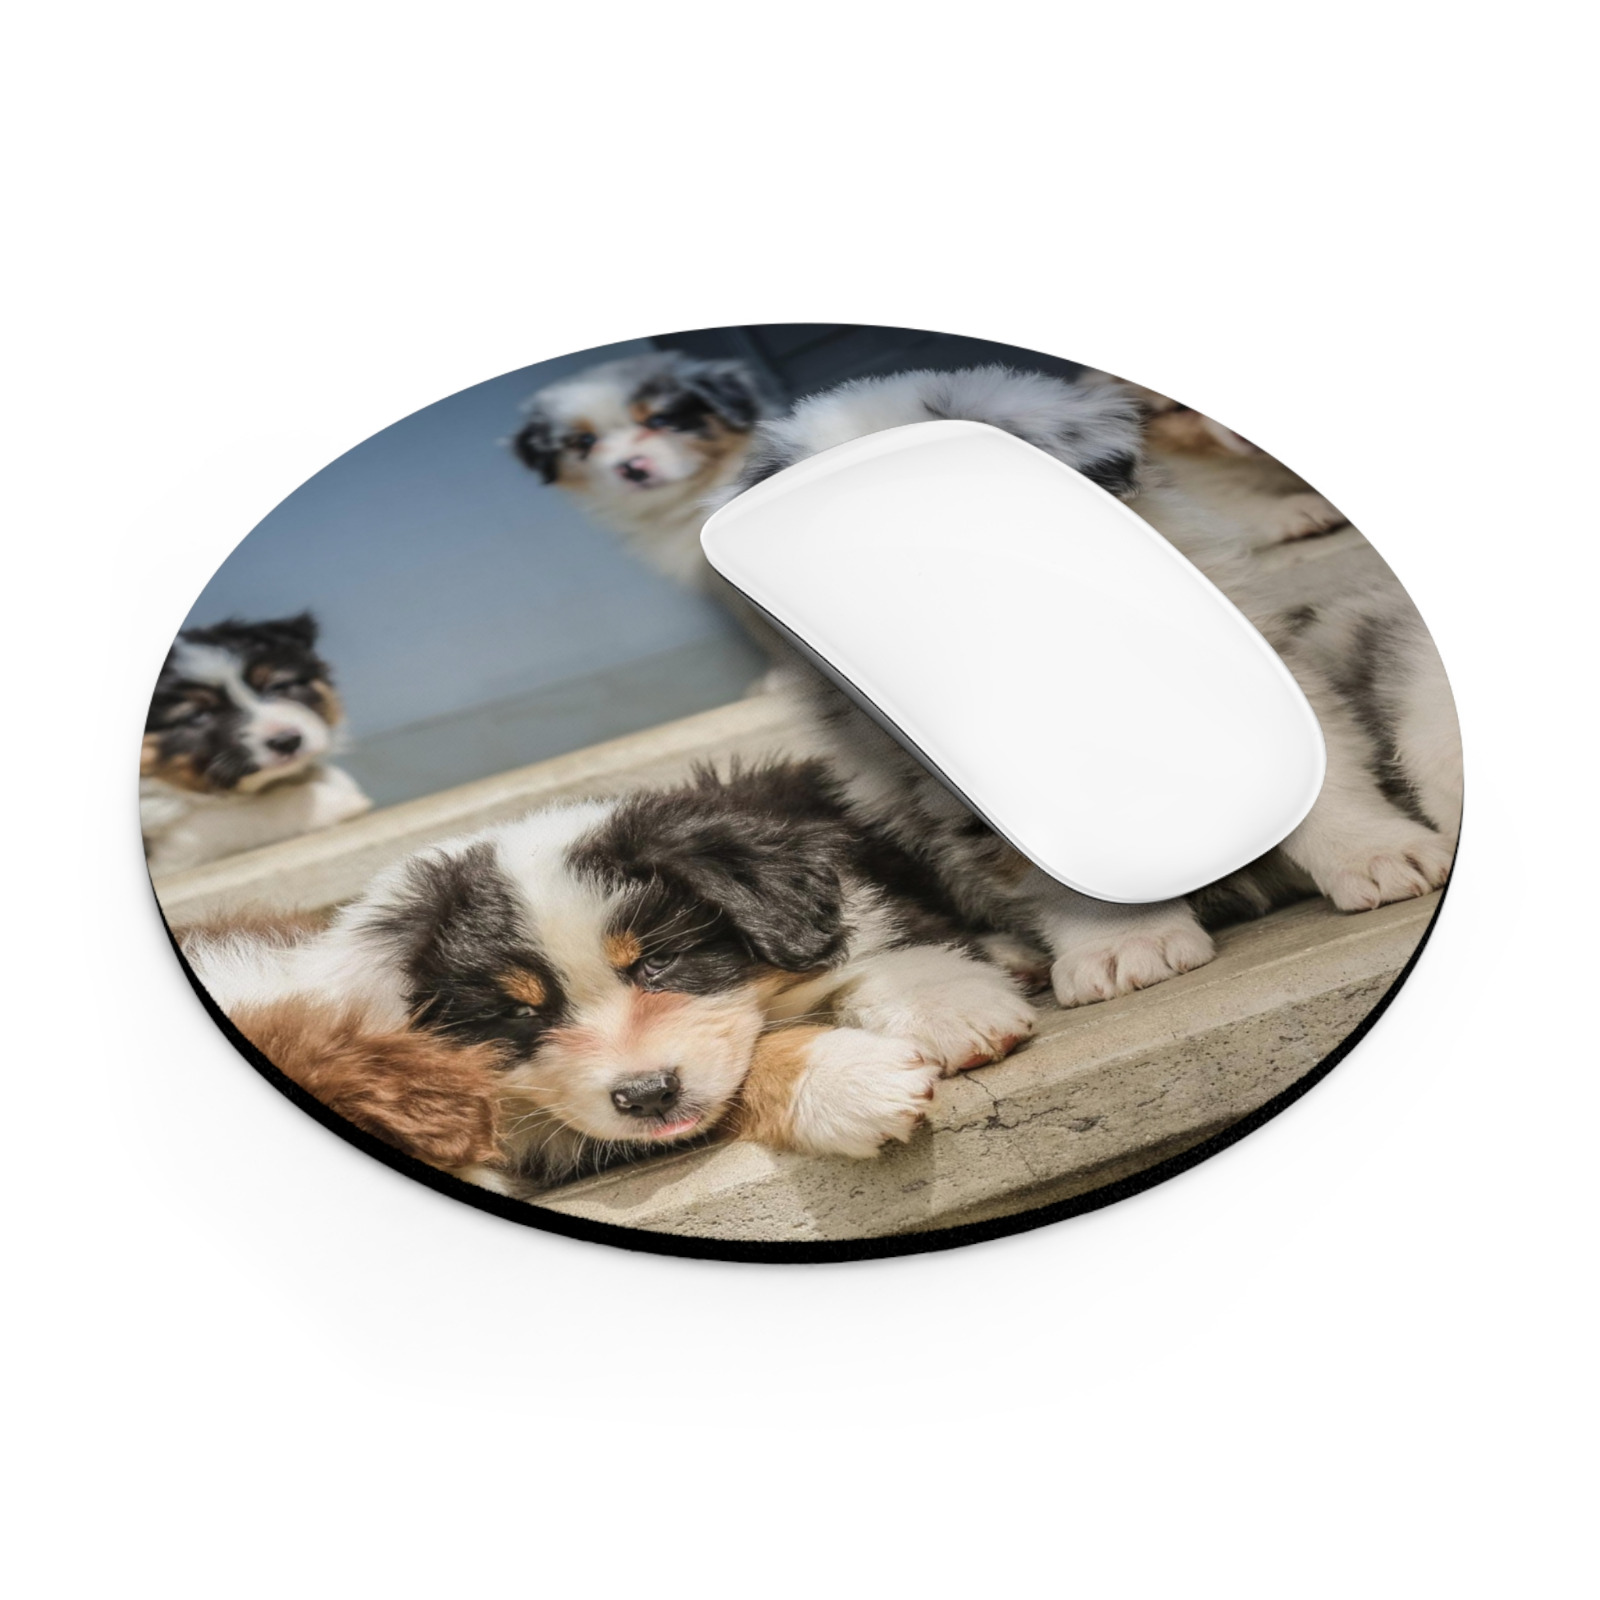 Puppies Cute Mousepad - 7.5 inch circle mousepad - Dog Pet Animal Lover Mat